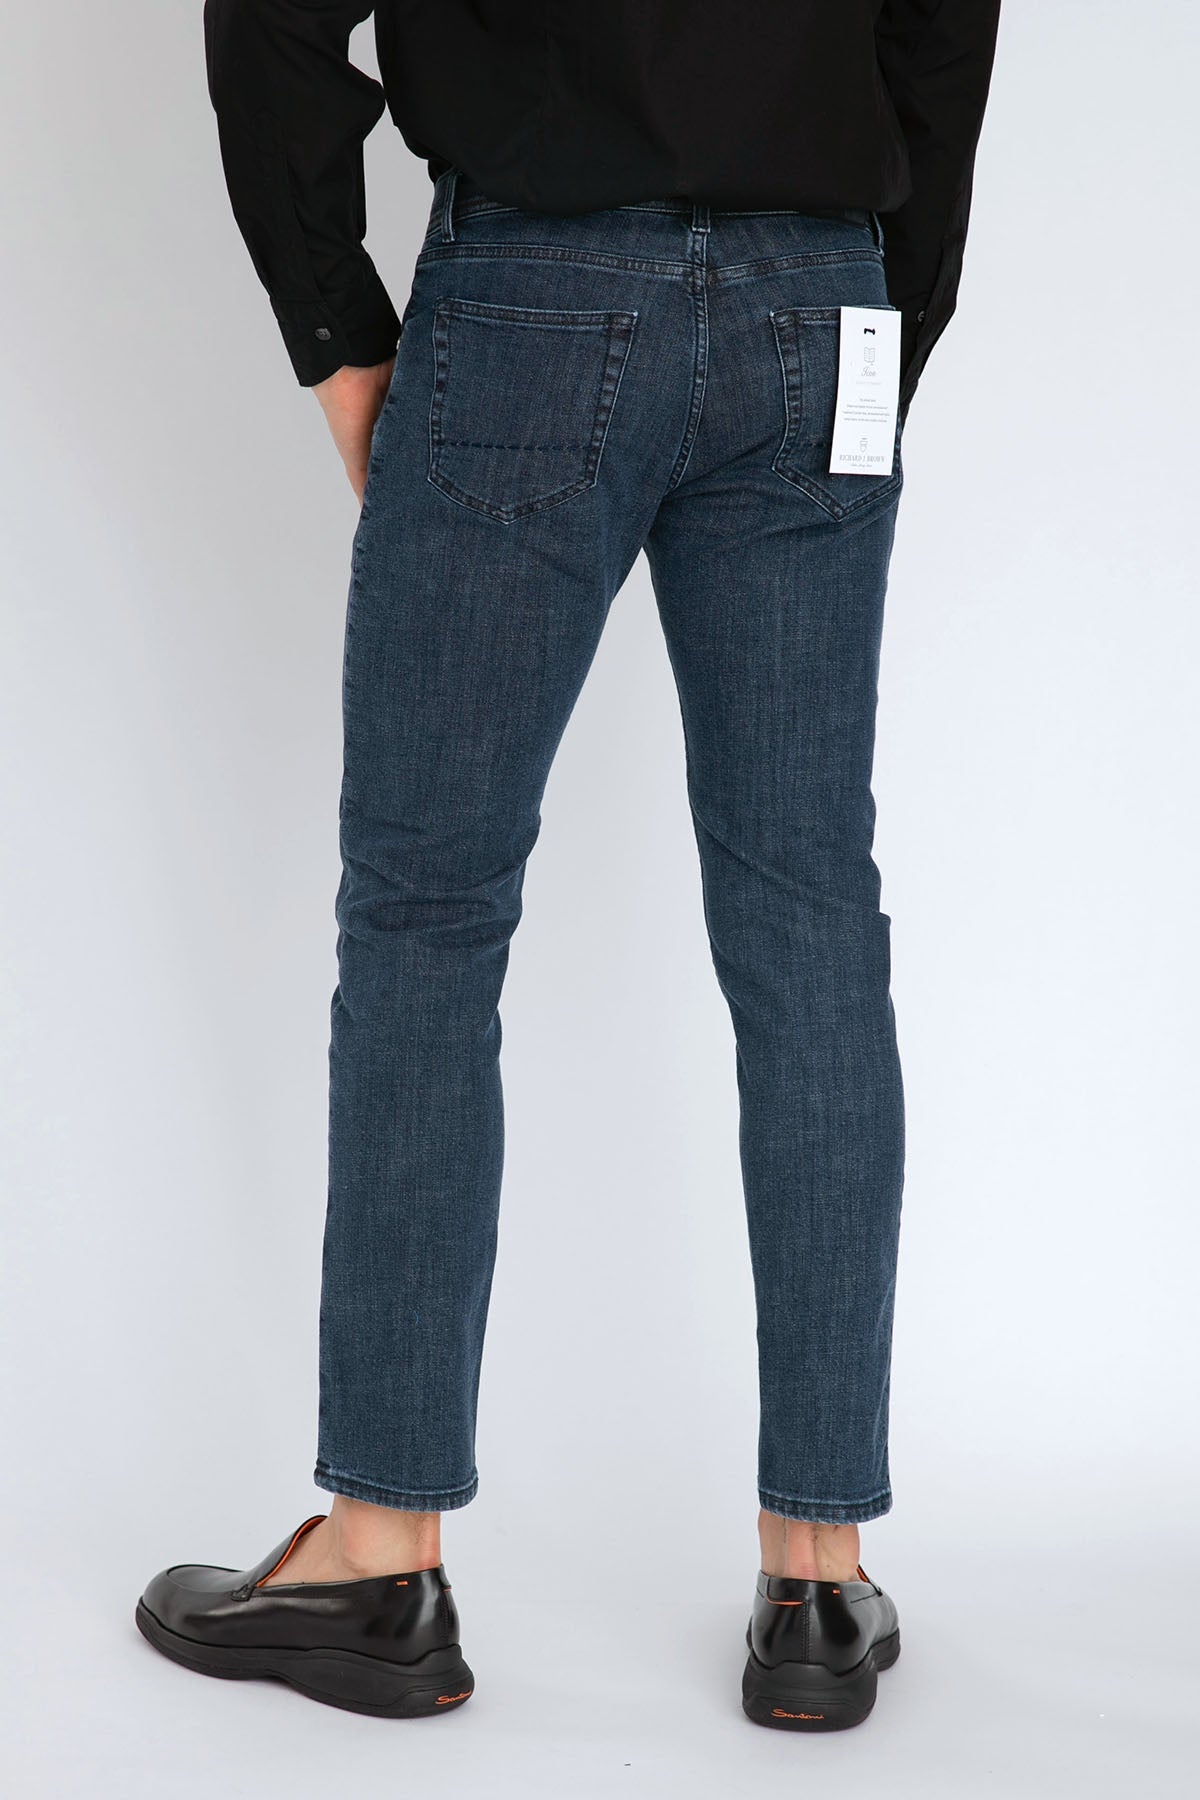 Richard J. Brown Tokyo Yıkamalı Slim Fit Jeans